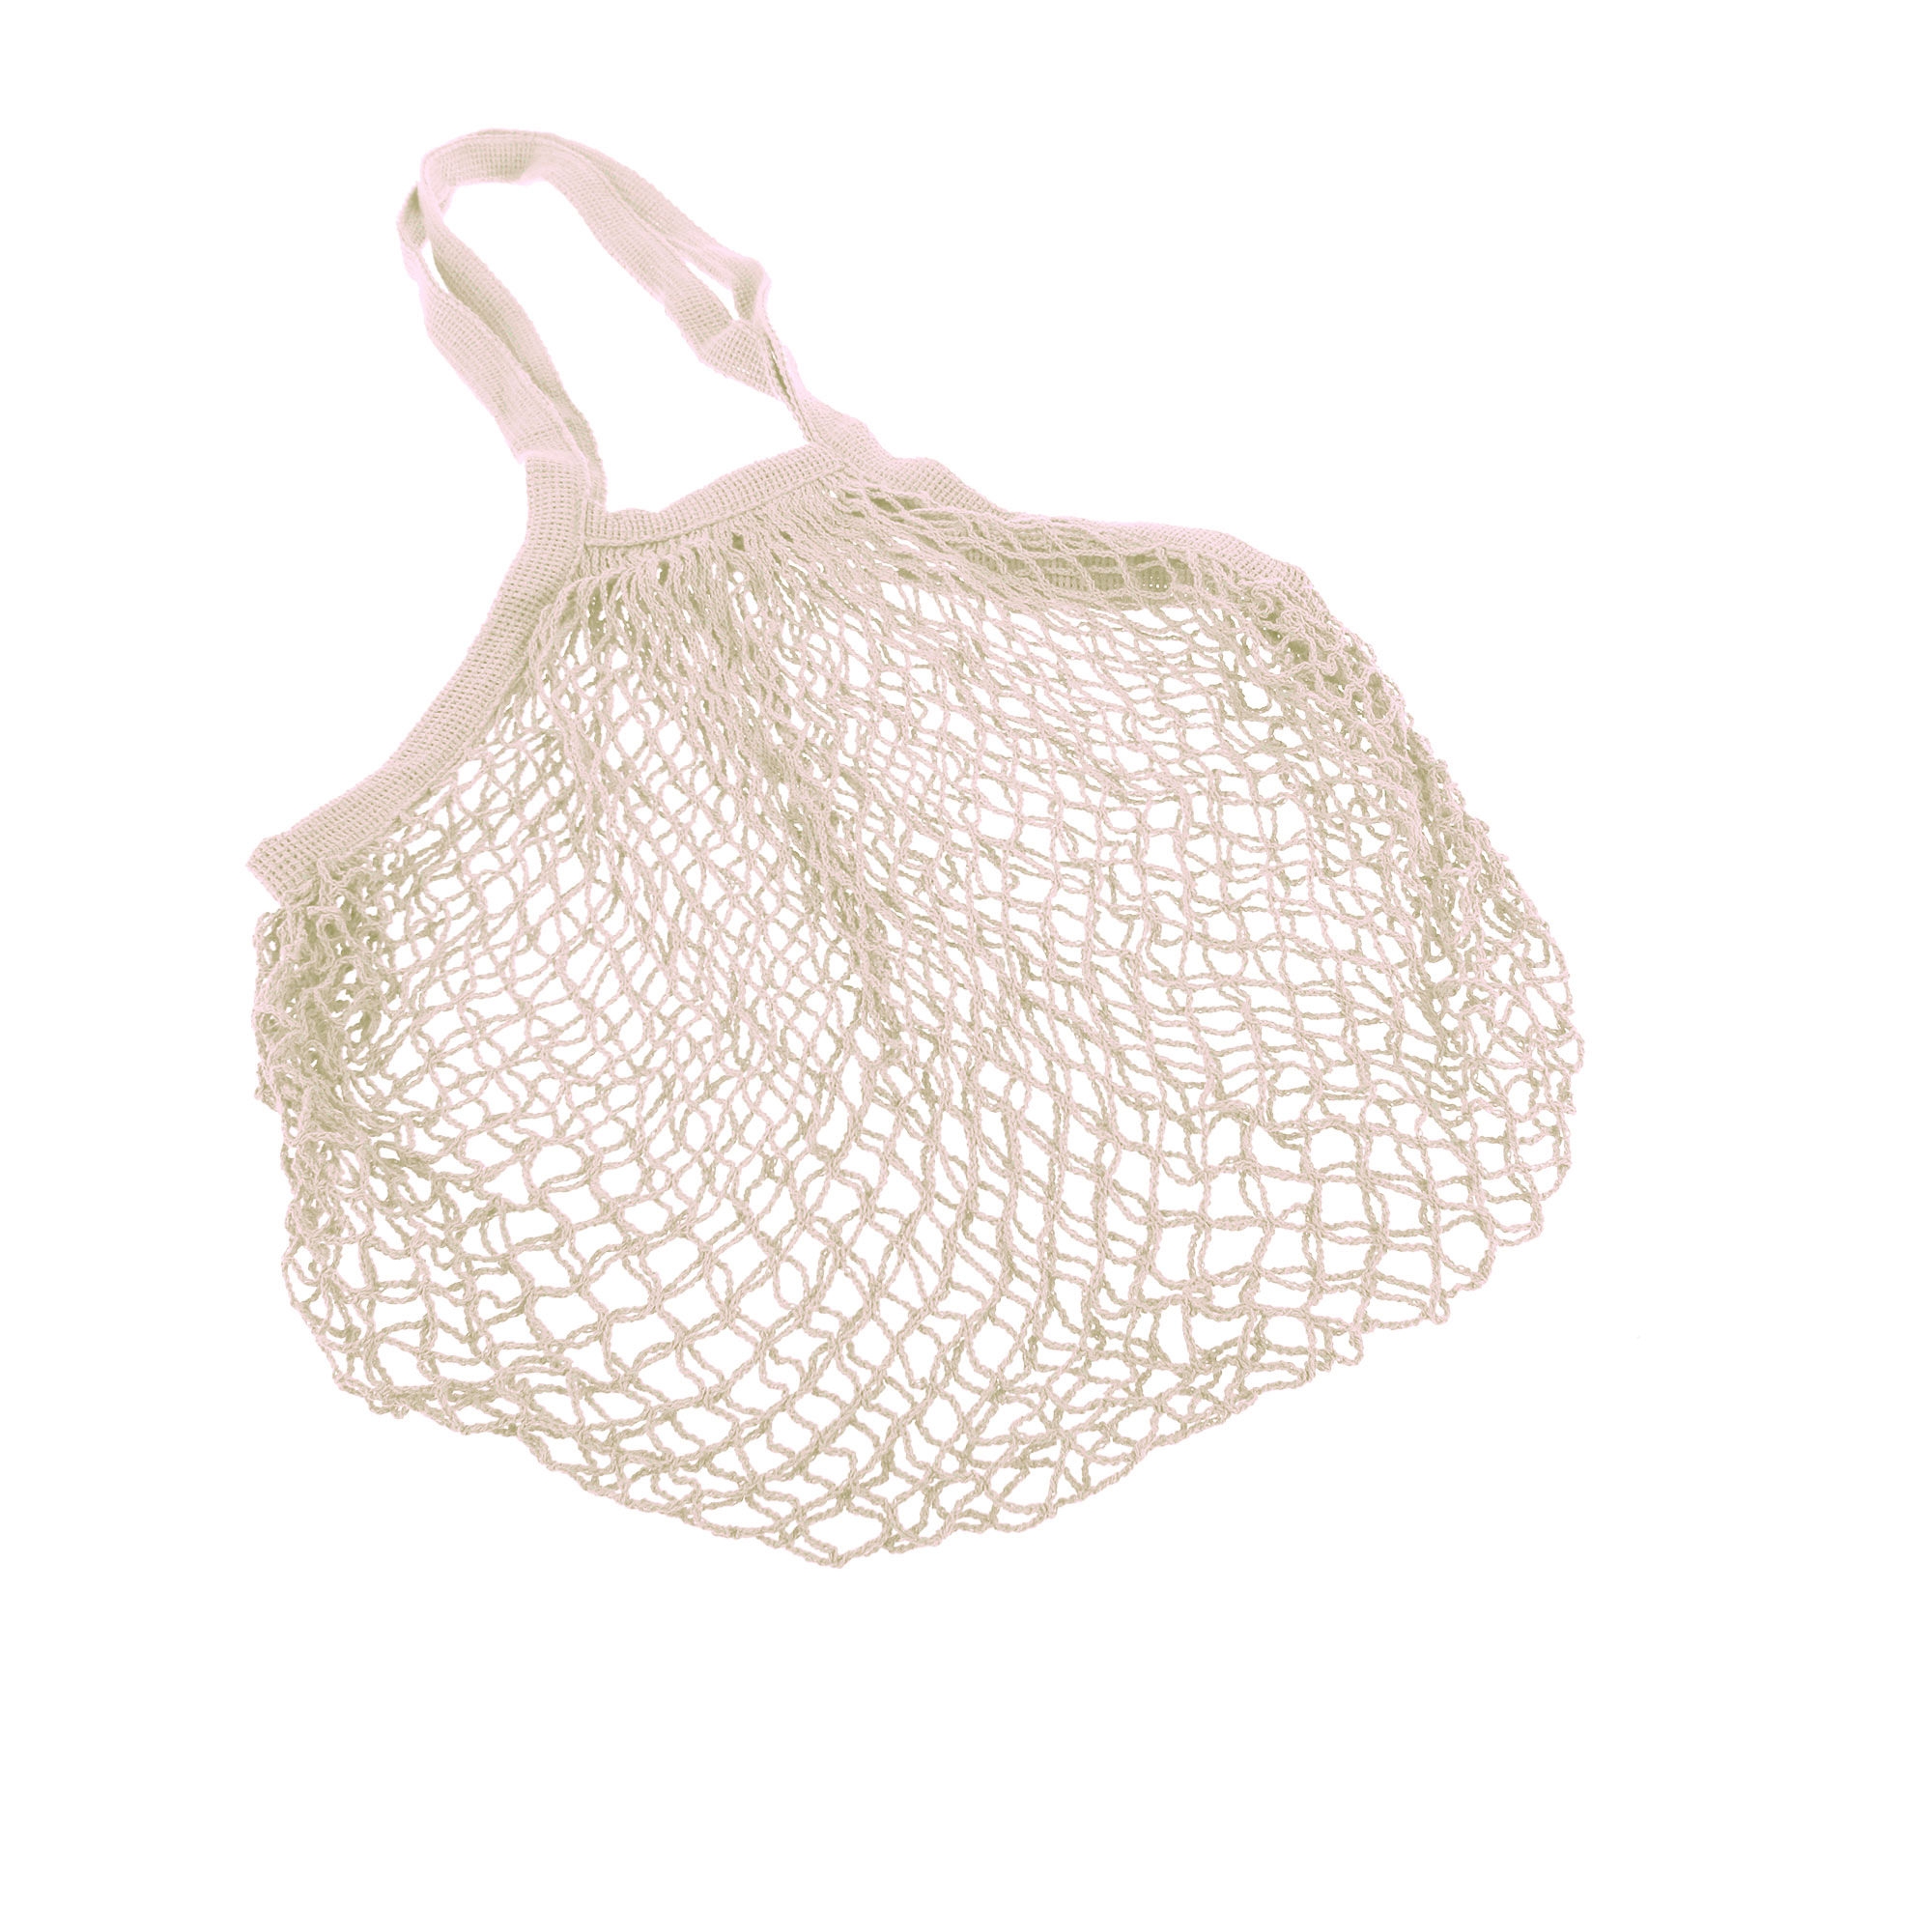 Sachi Cotton String Bag Long Handle Natural Image 1